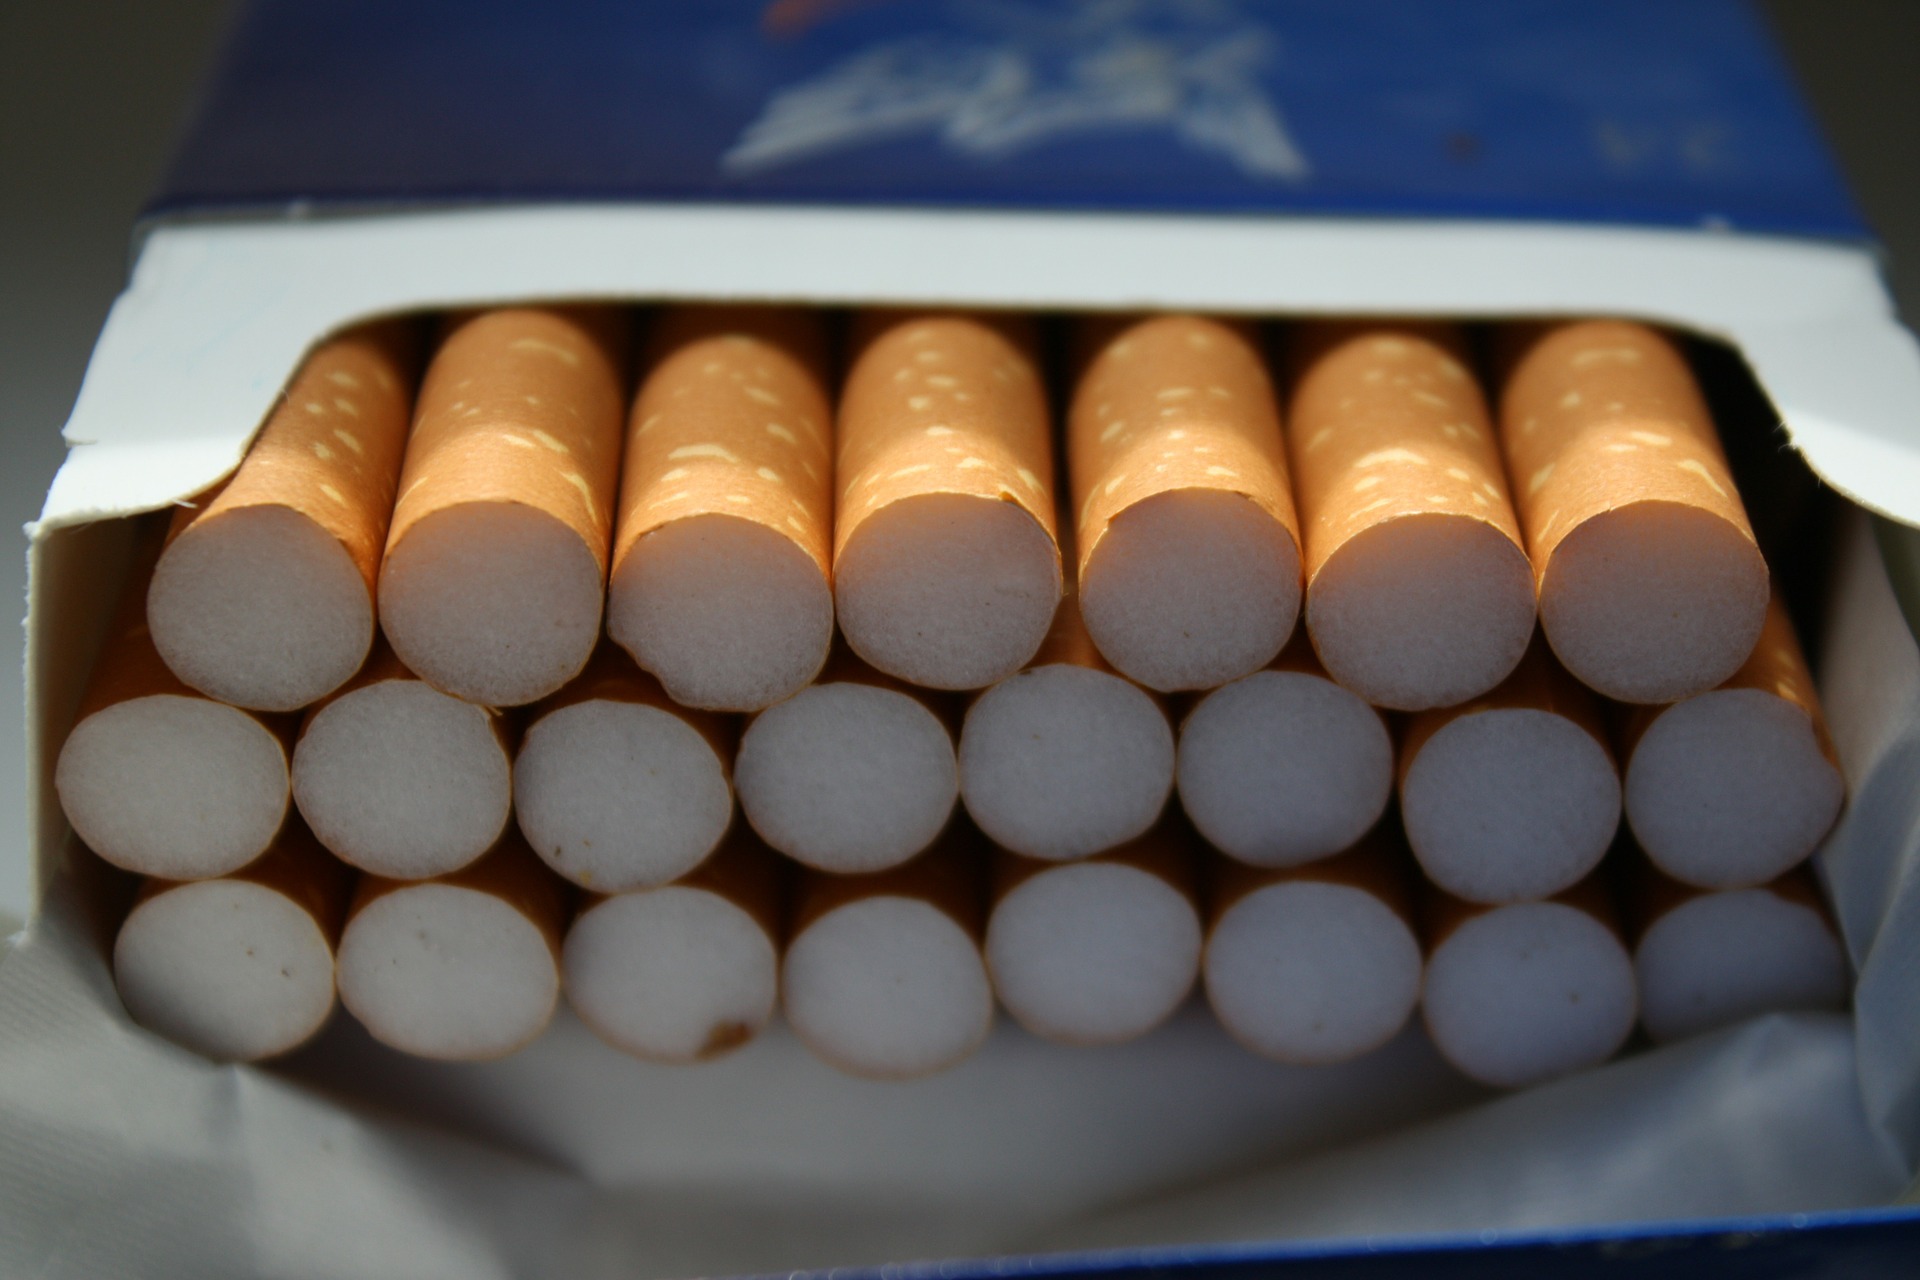 caixa de cigarros aberta cheia de cigarros